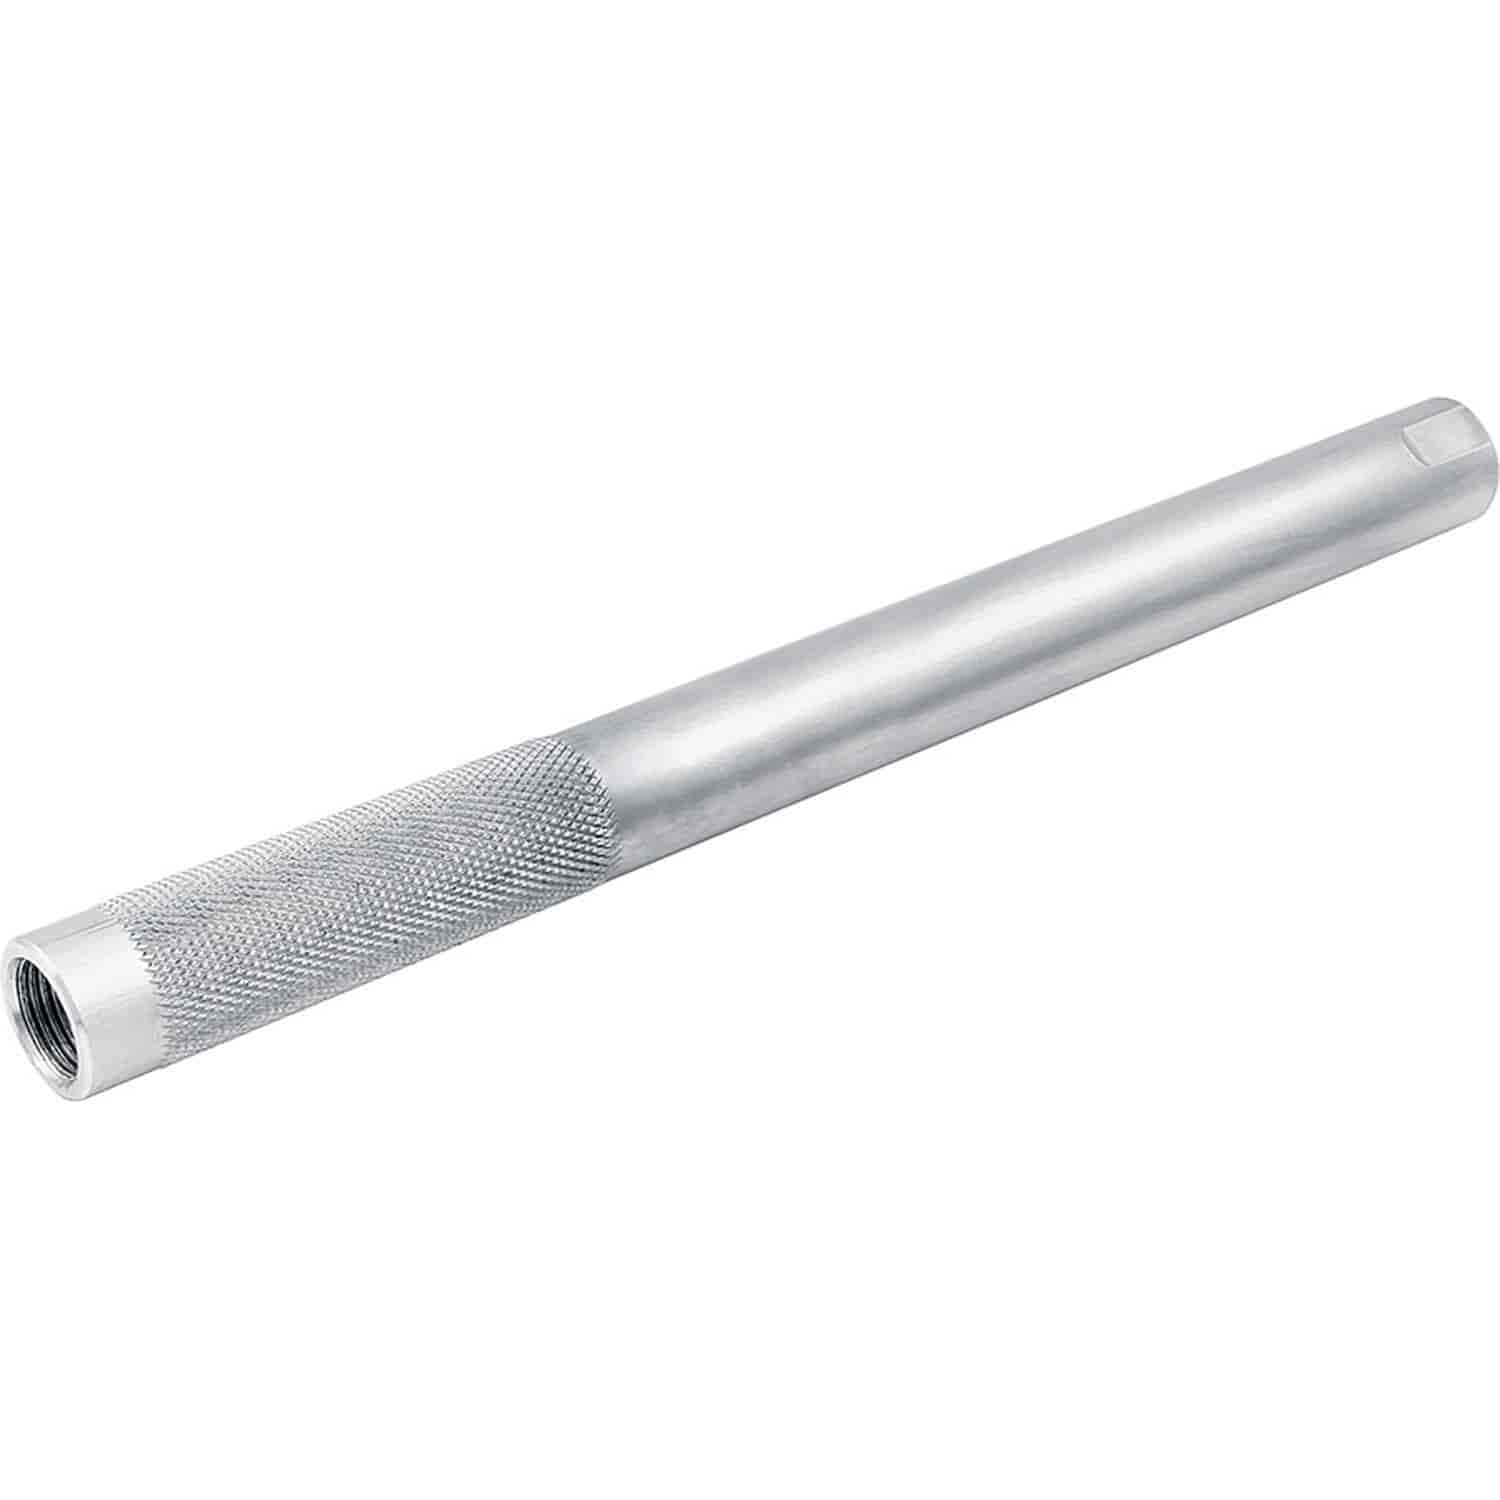 Swedged Aluminum Tie Rod Tube Length: 24"